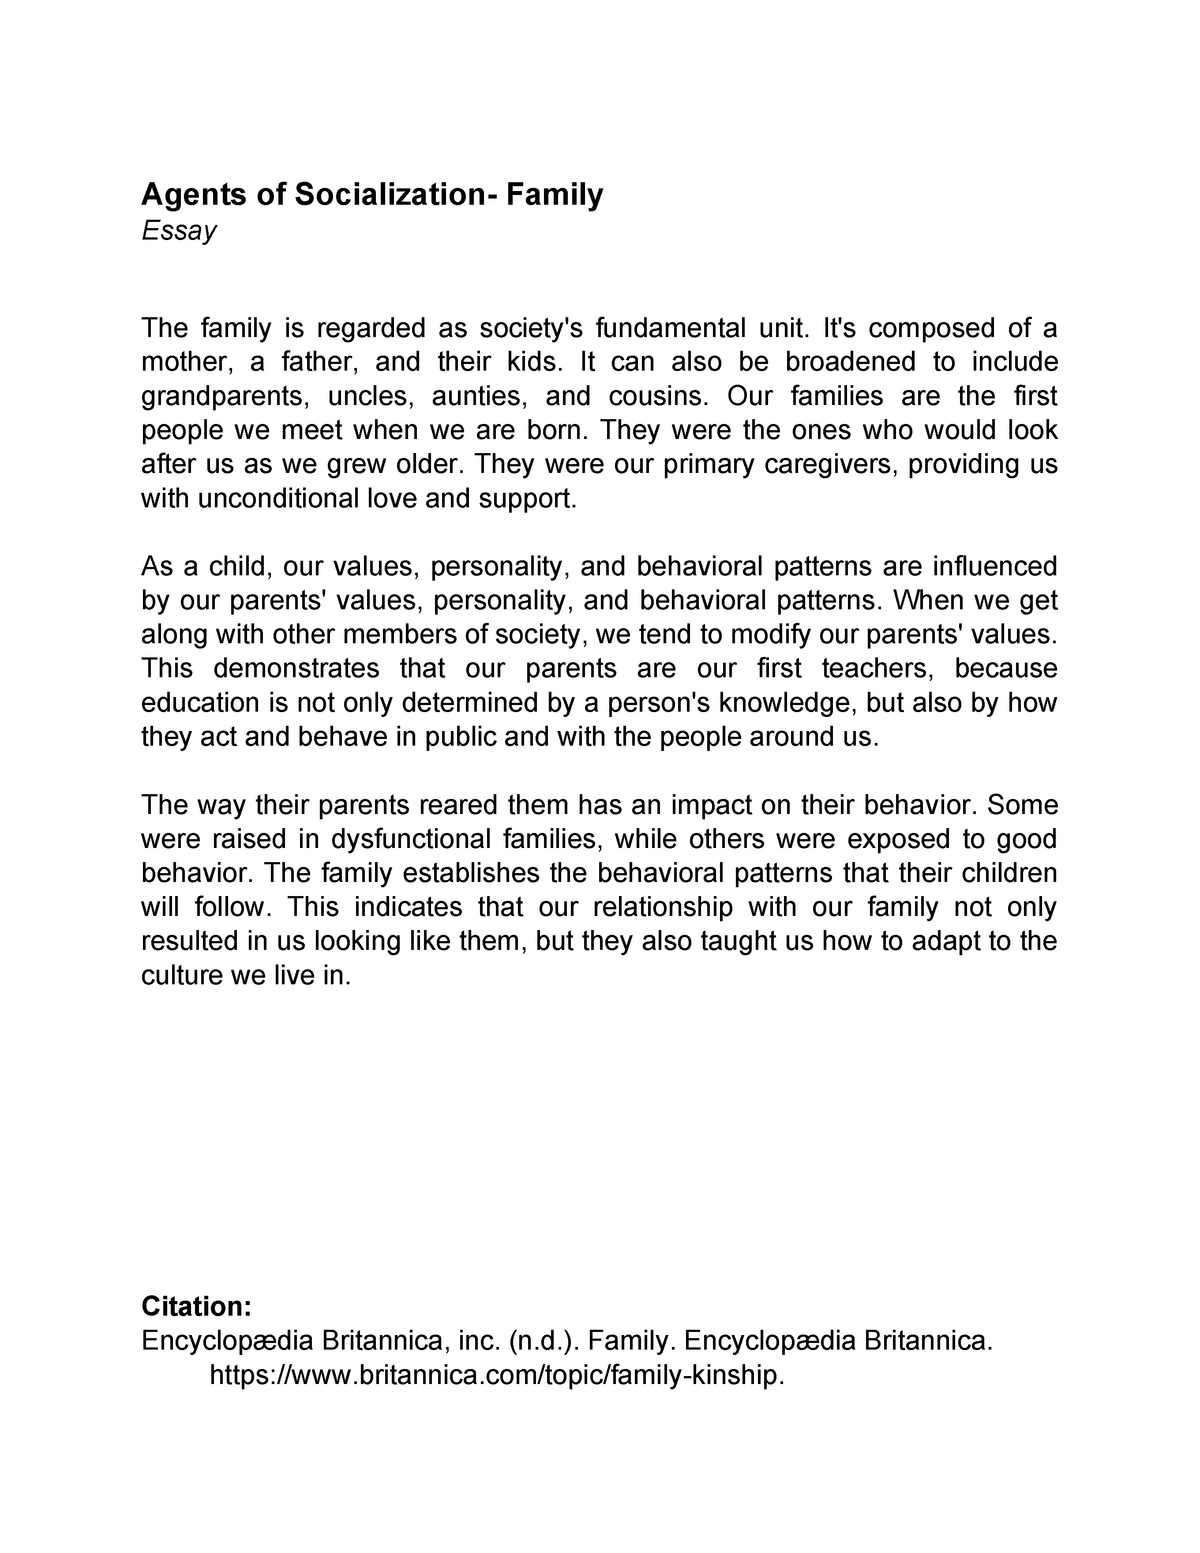 essay on socialization in family